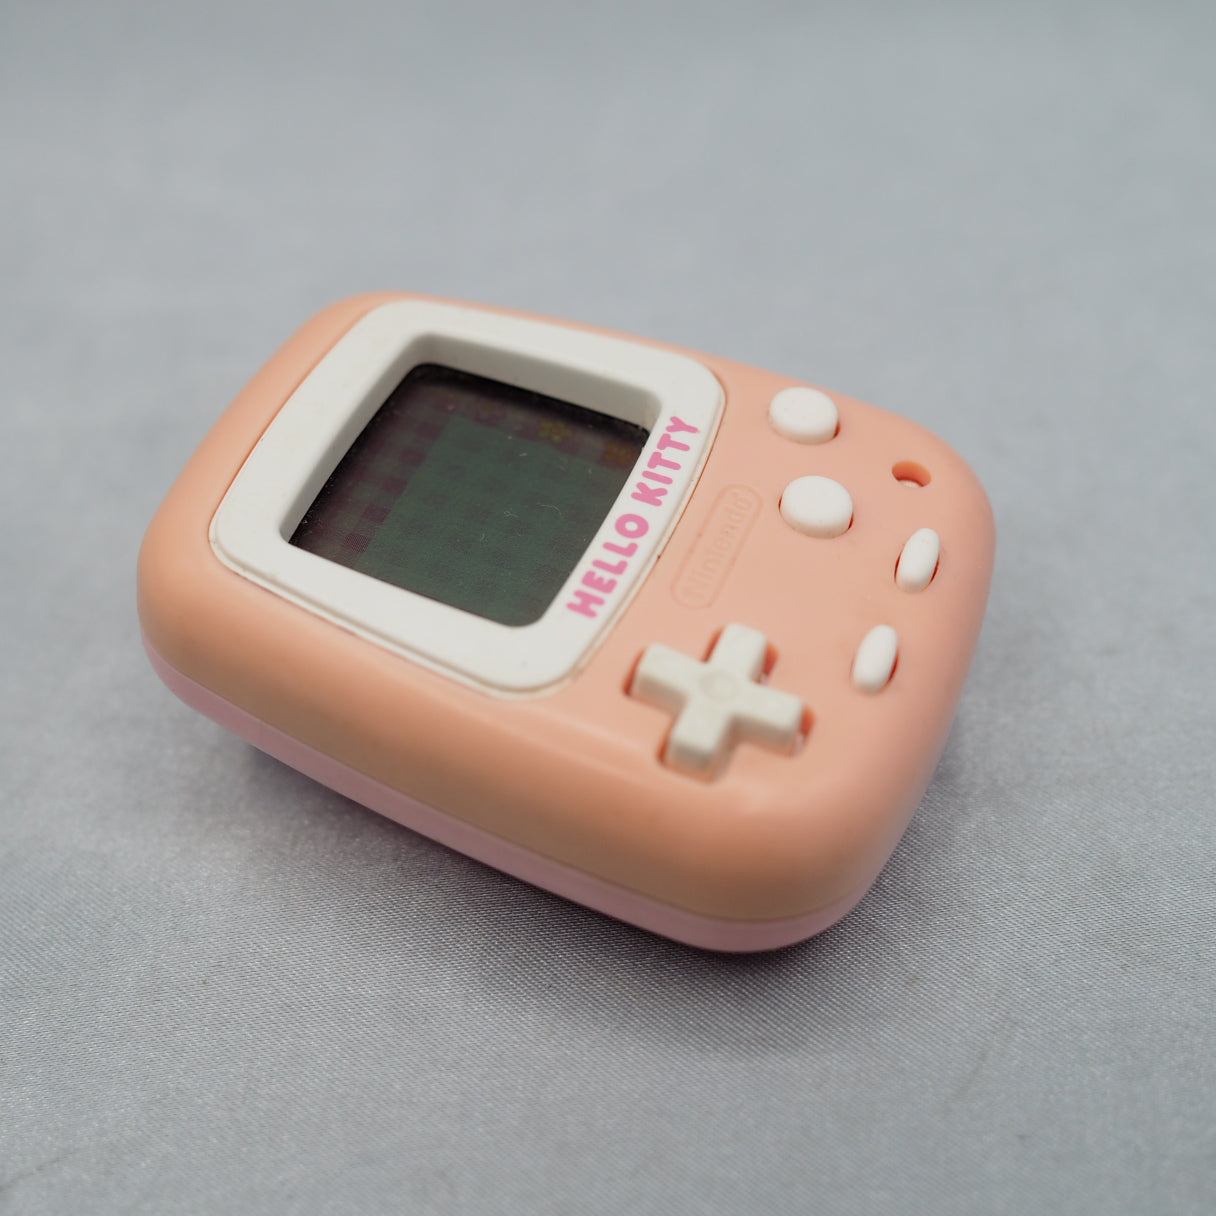 [JUNK] Nintendo Pocket Hello Kitty Console